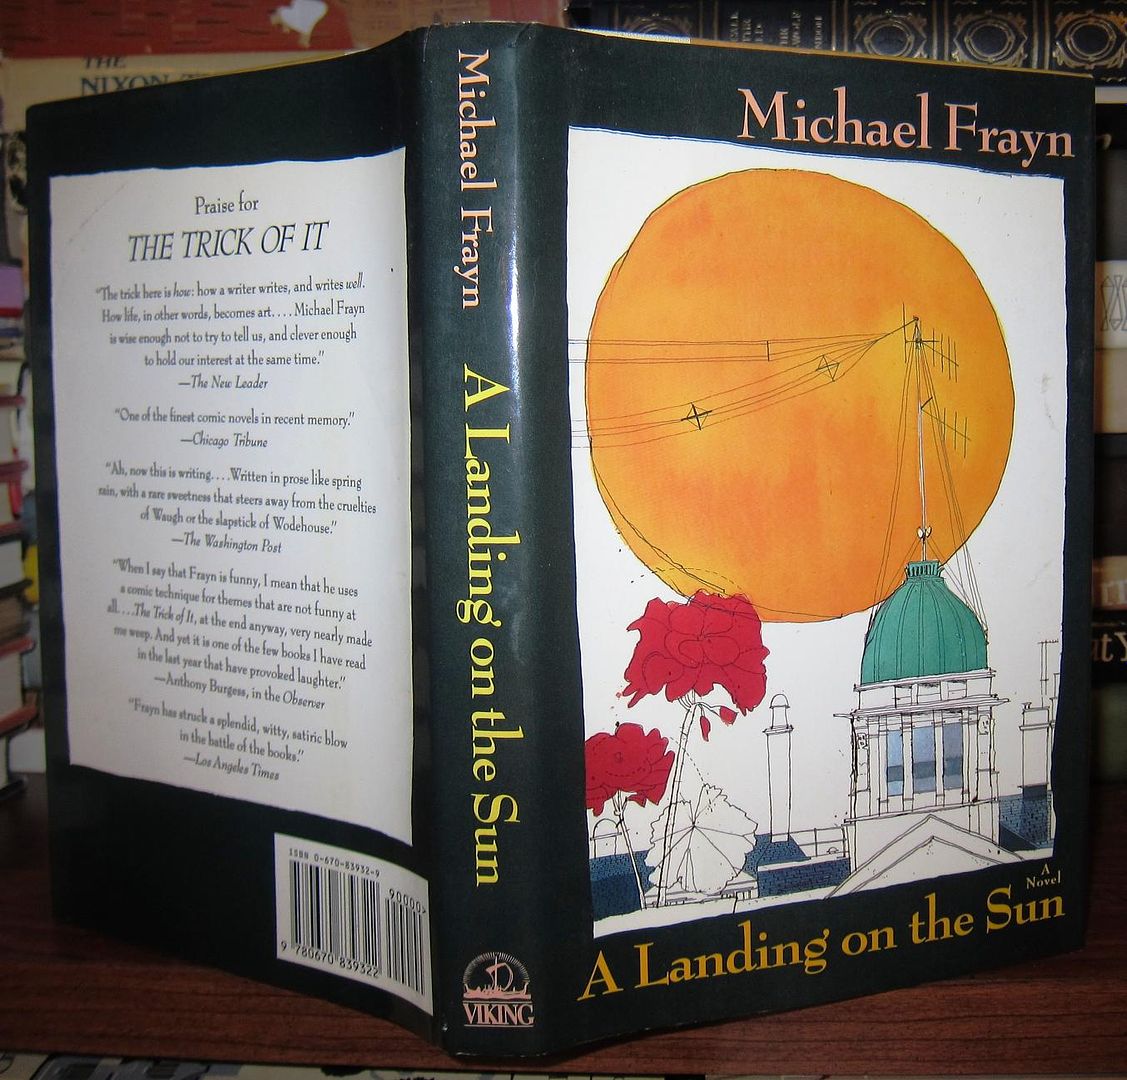 FRAYN, MICHAEL - A Landing on the Sun